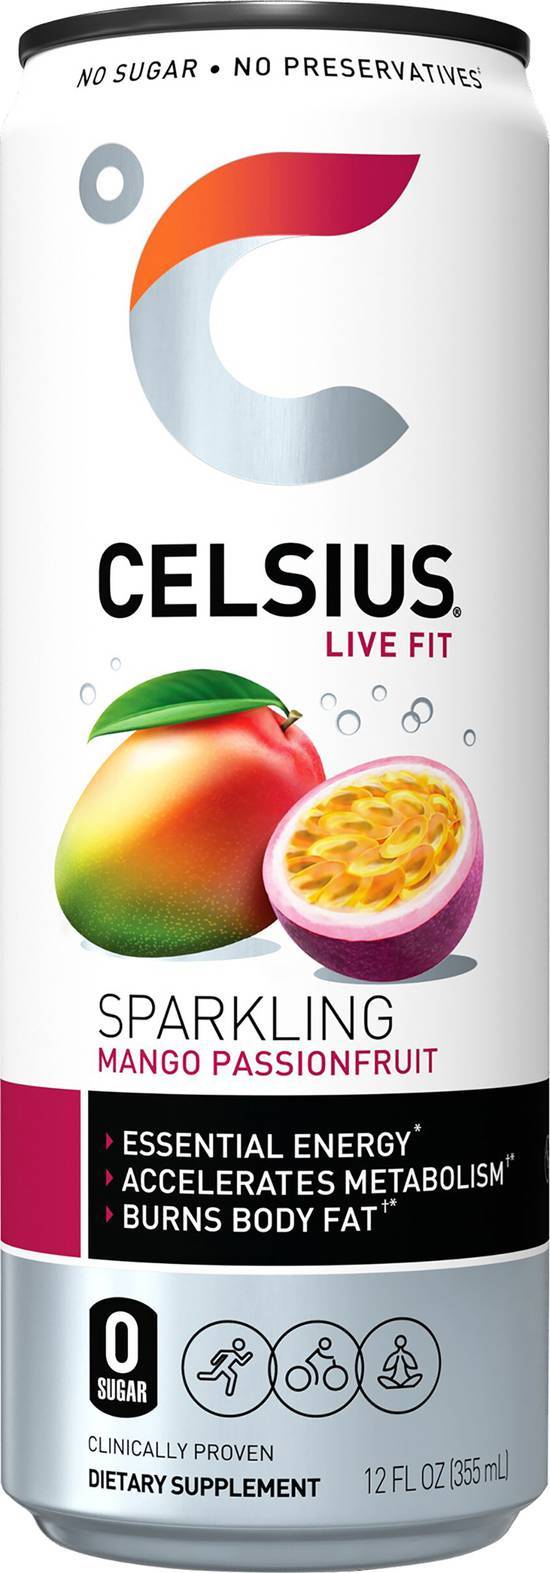 Celsius Sparkling Mango Passionfruit Fitness Drink (12 fl oz)